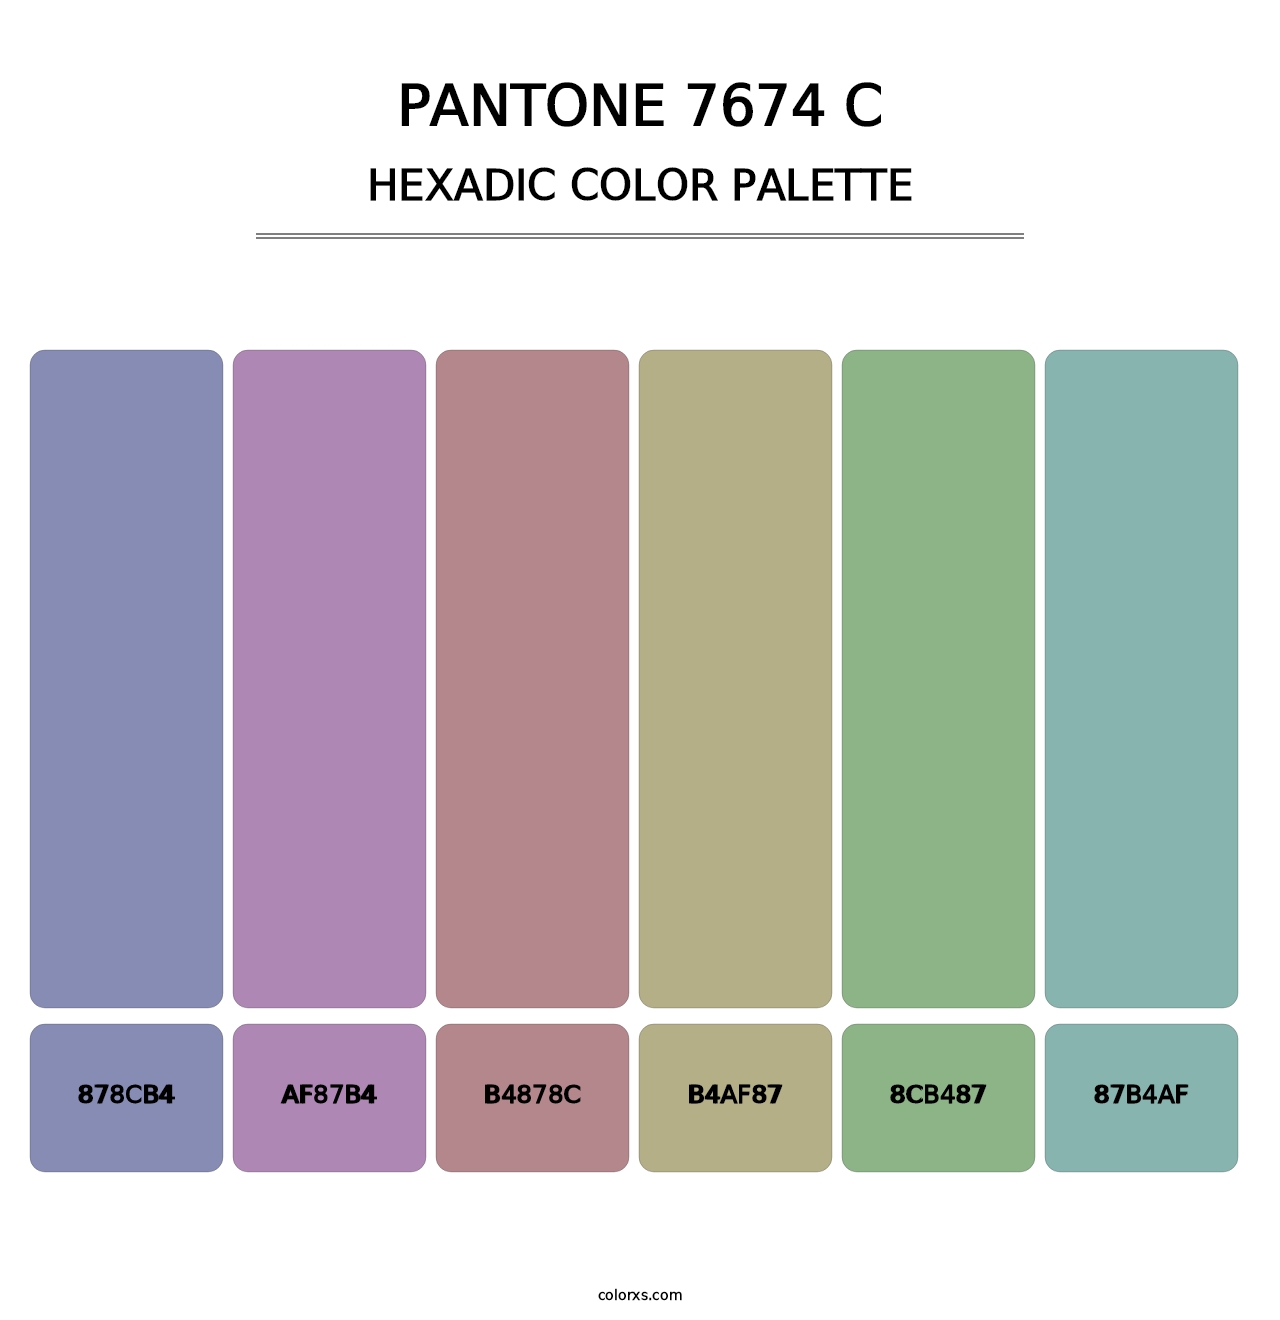 PANTONE 7674 C - Hexadic Color Palette